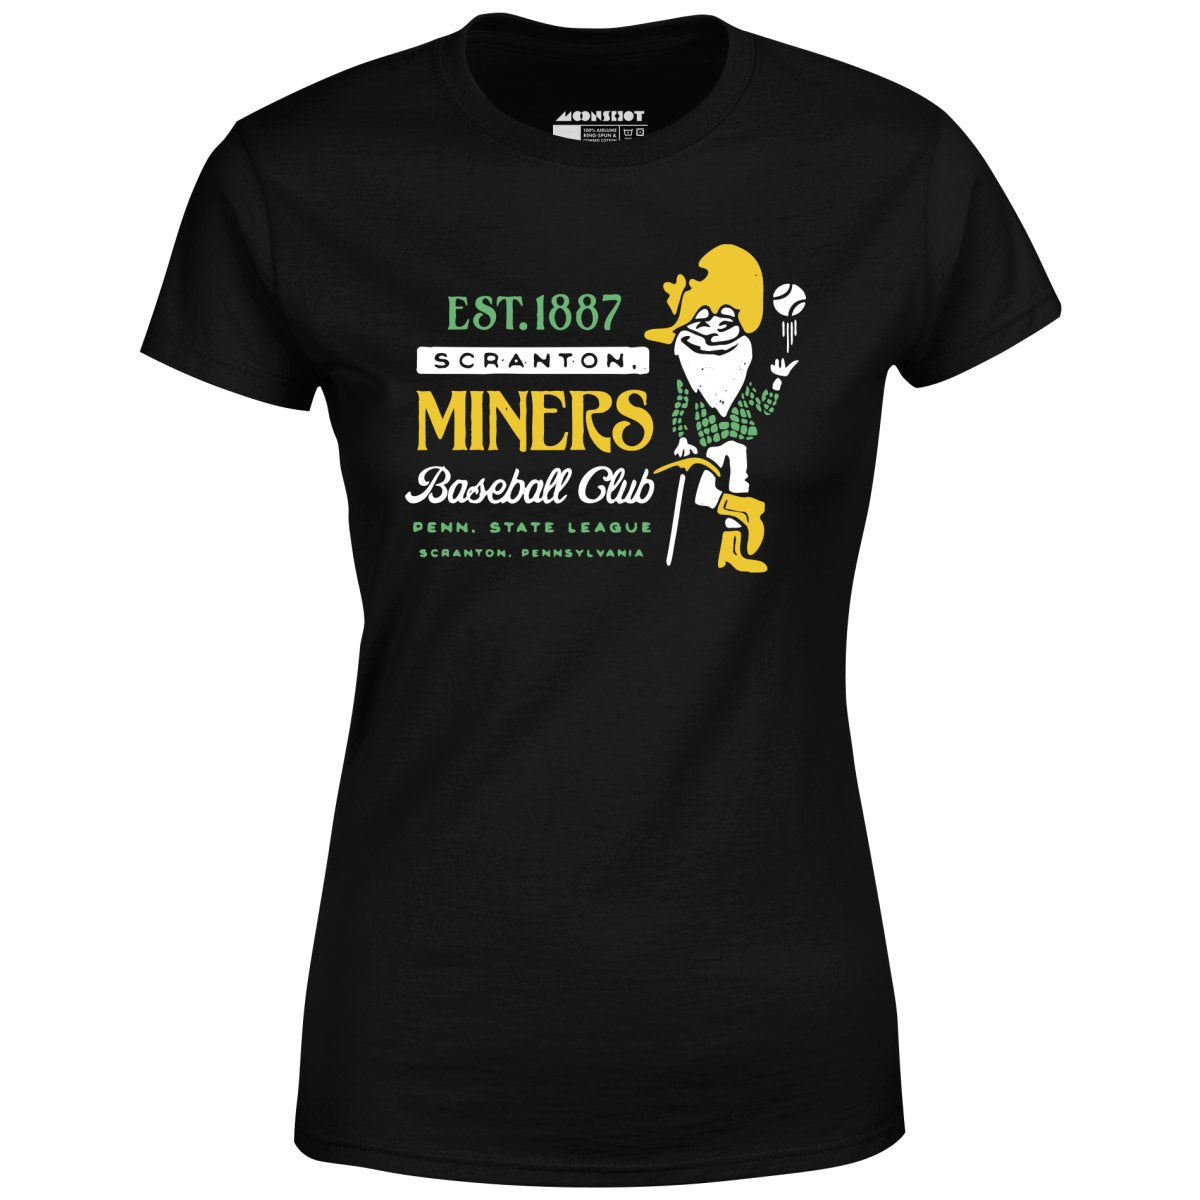 Scranton Miners - Pennsylvania - Vintage Defunct Baseball Teams - Women's T-Shirt